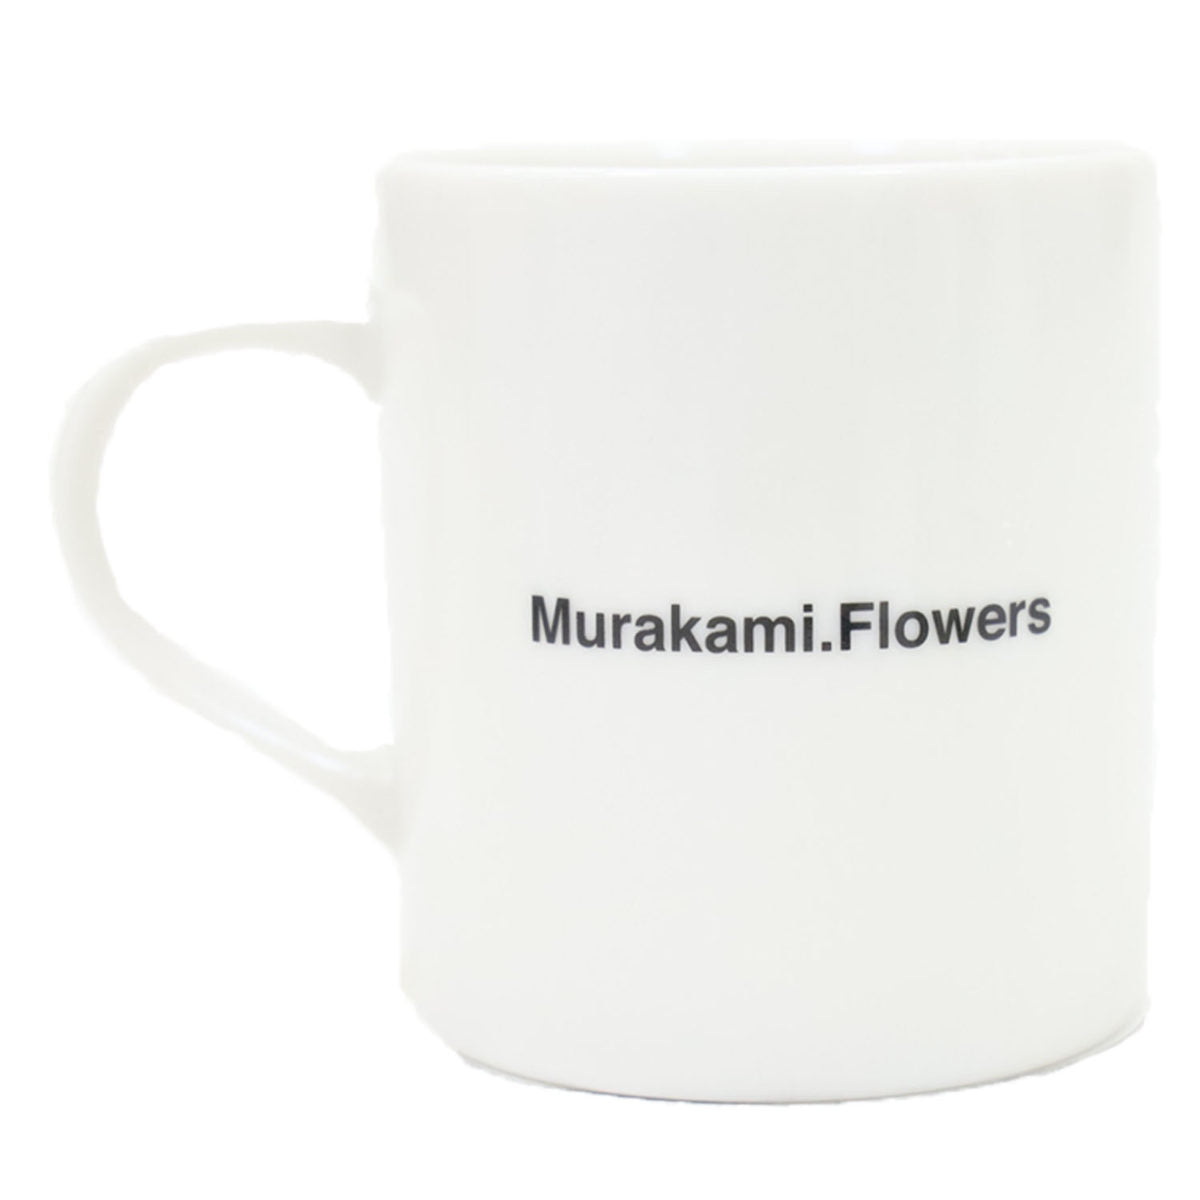 TAKASHI MURAKAMI - Murakami.Flowers #0000 Mug